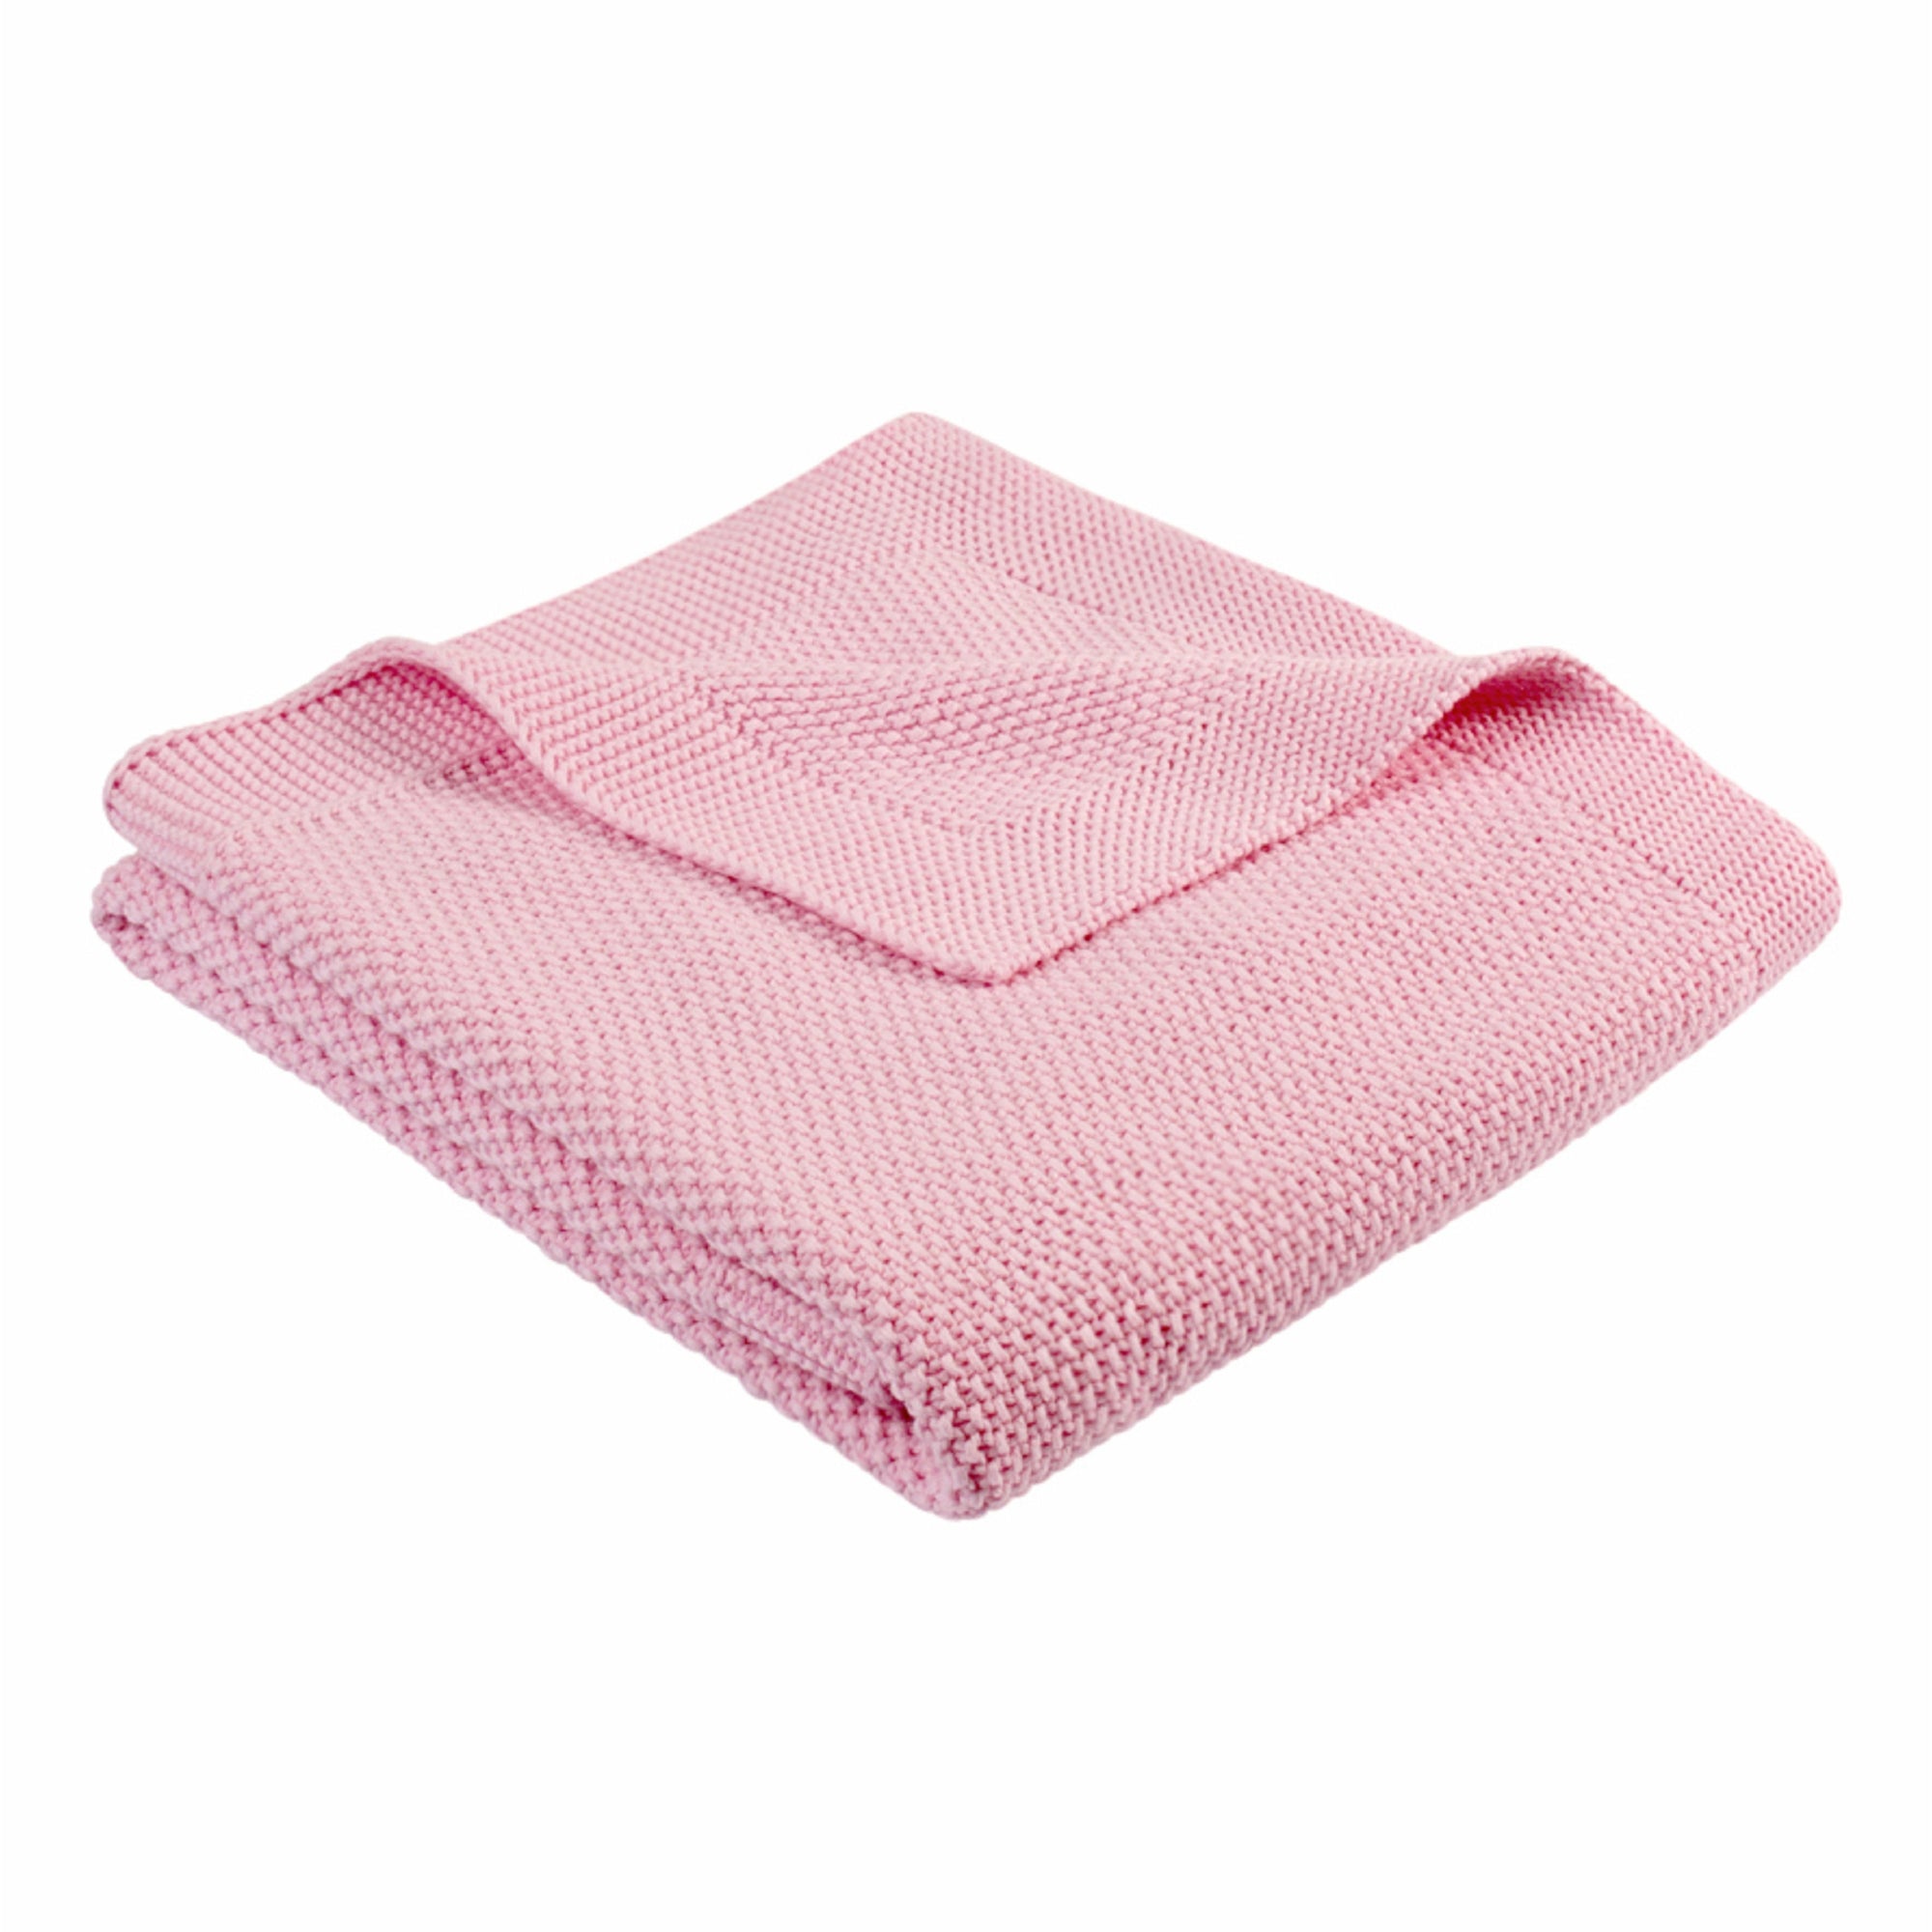 Premium Knit Baby Blanket